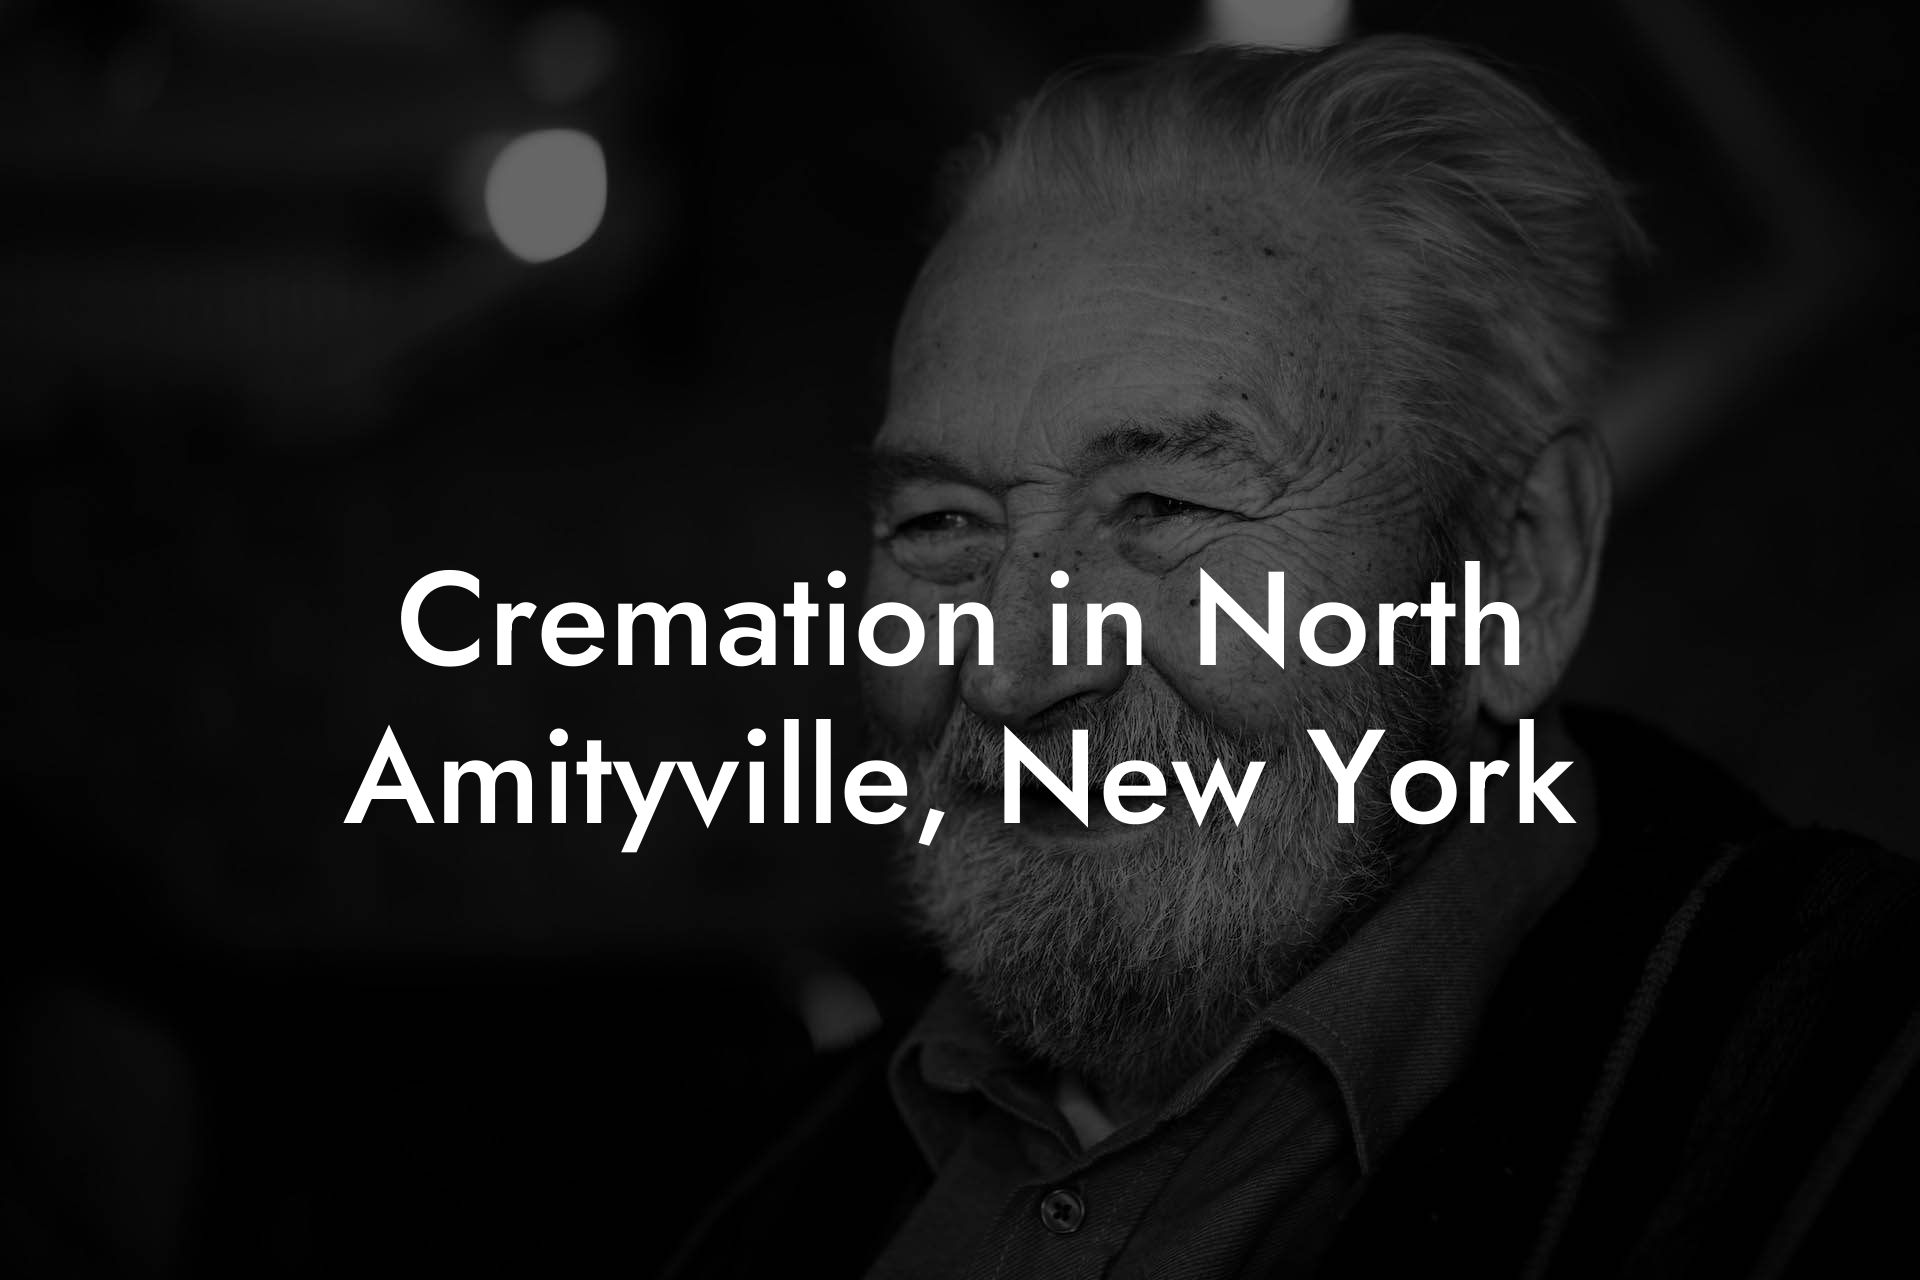 Cremation in North Amityville, New York